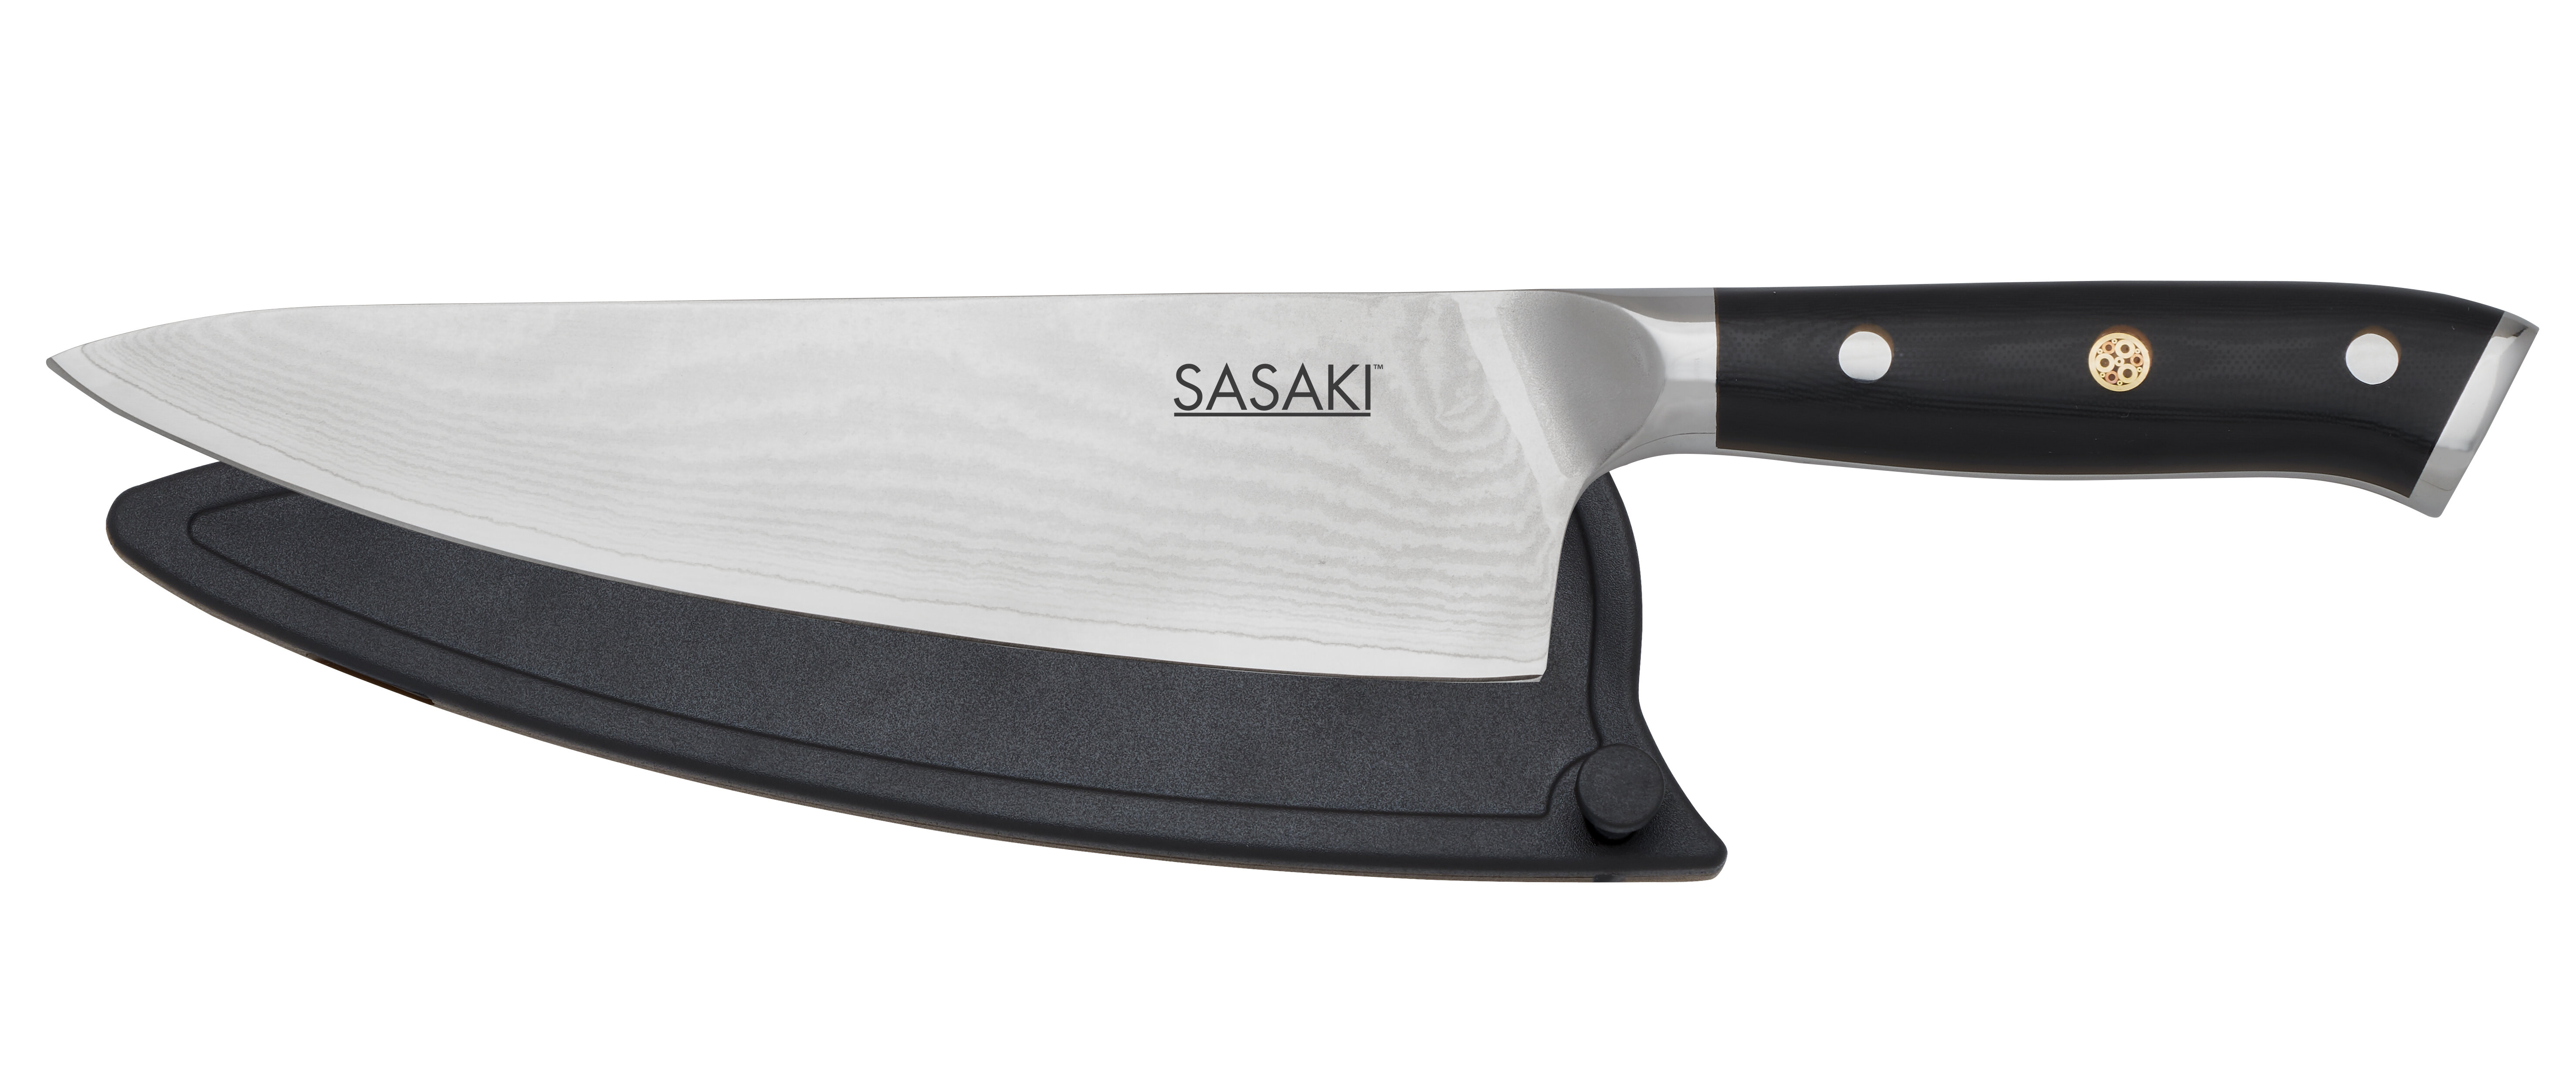 Sasaki Masuta Japanese AUS-10 Stainless Steel Chef Knife with Locking Sheath,  8-Inch, Black